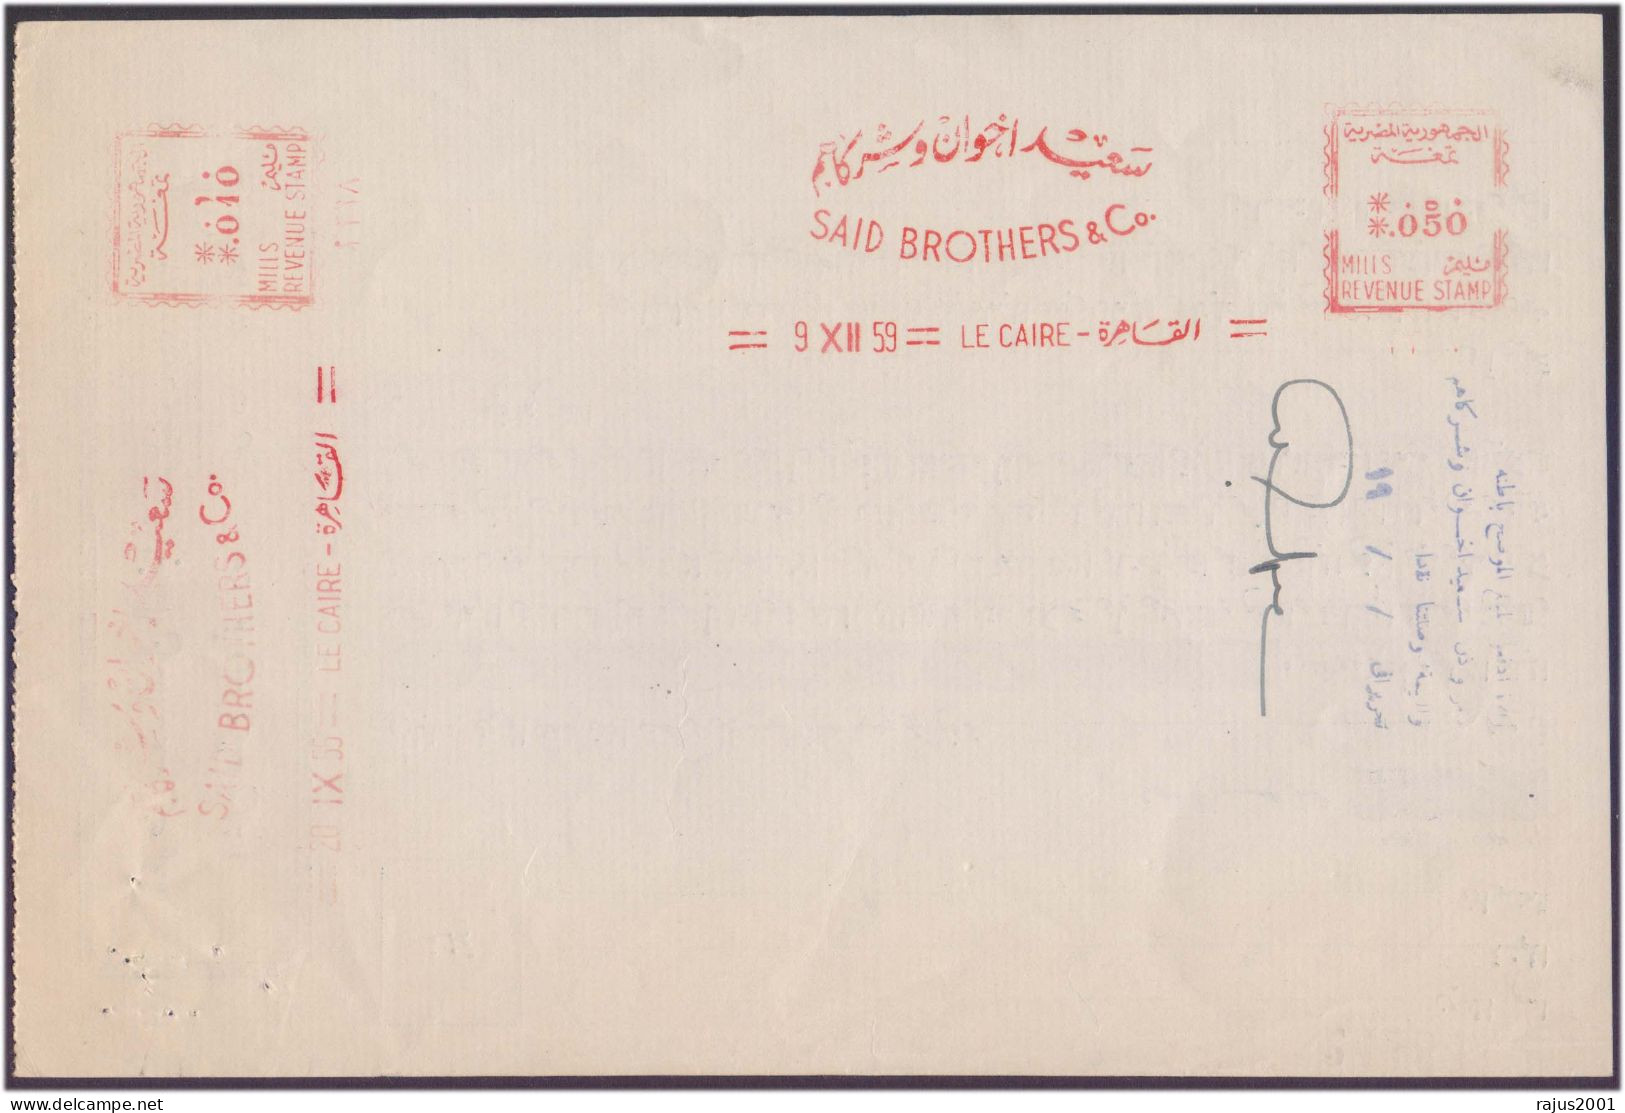 Said Brothers & Co. EMA Red Meter Frank Revenue Stamp, Saad Al Din Al Sanbari Bond Paper Egypt Postal Stationary 1959 - Cartas & Documentos